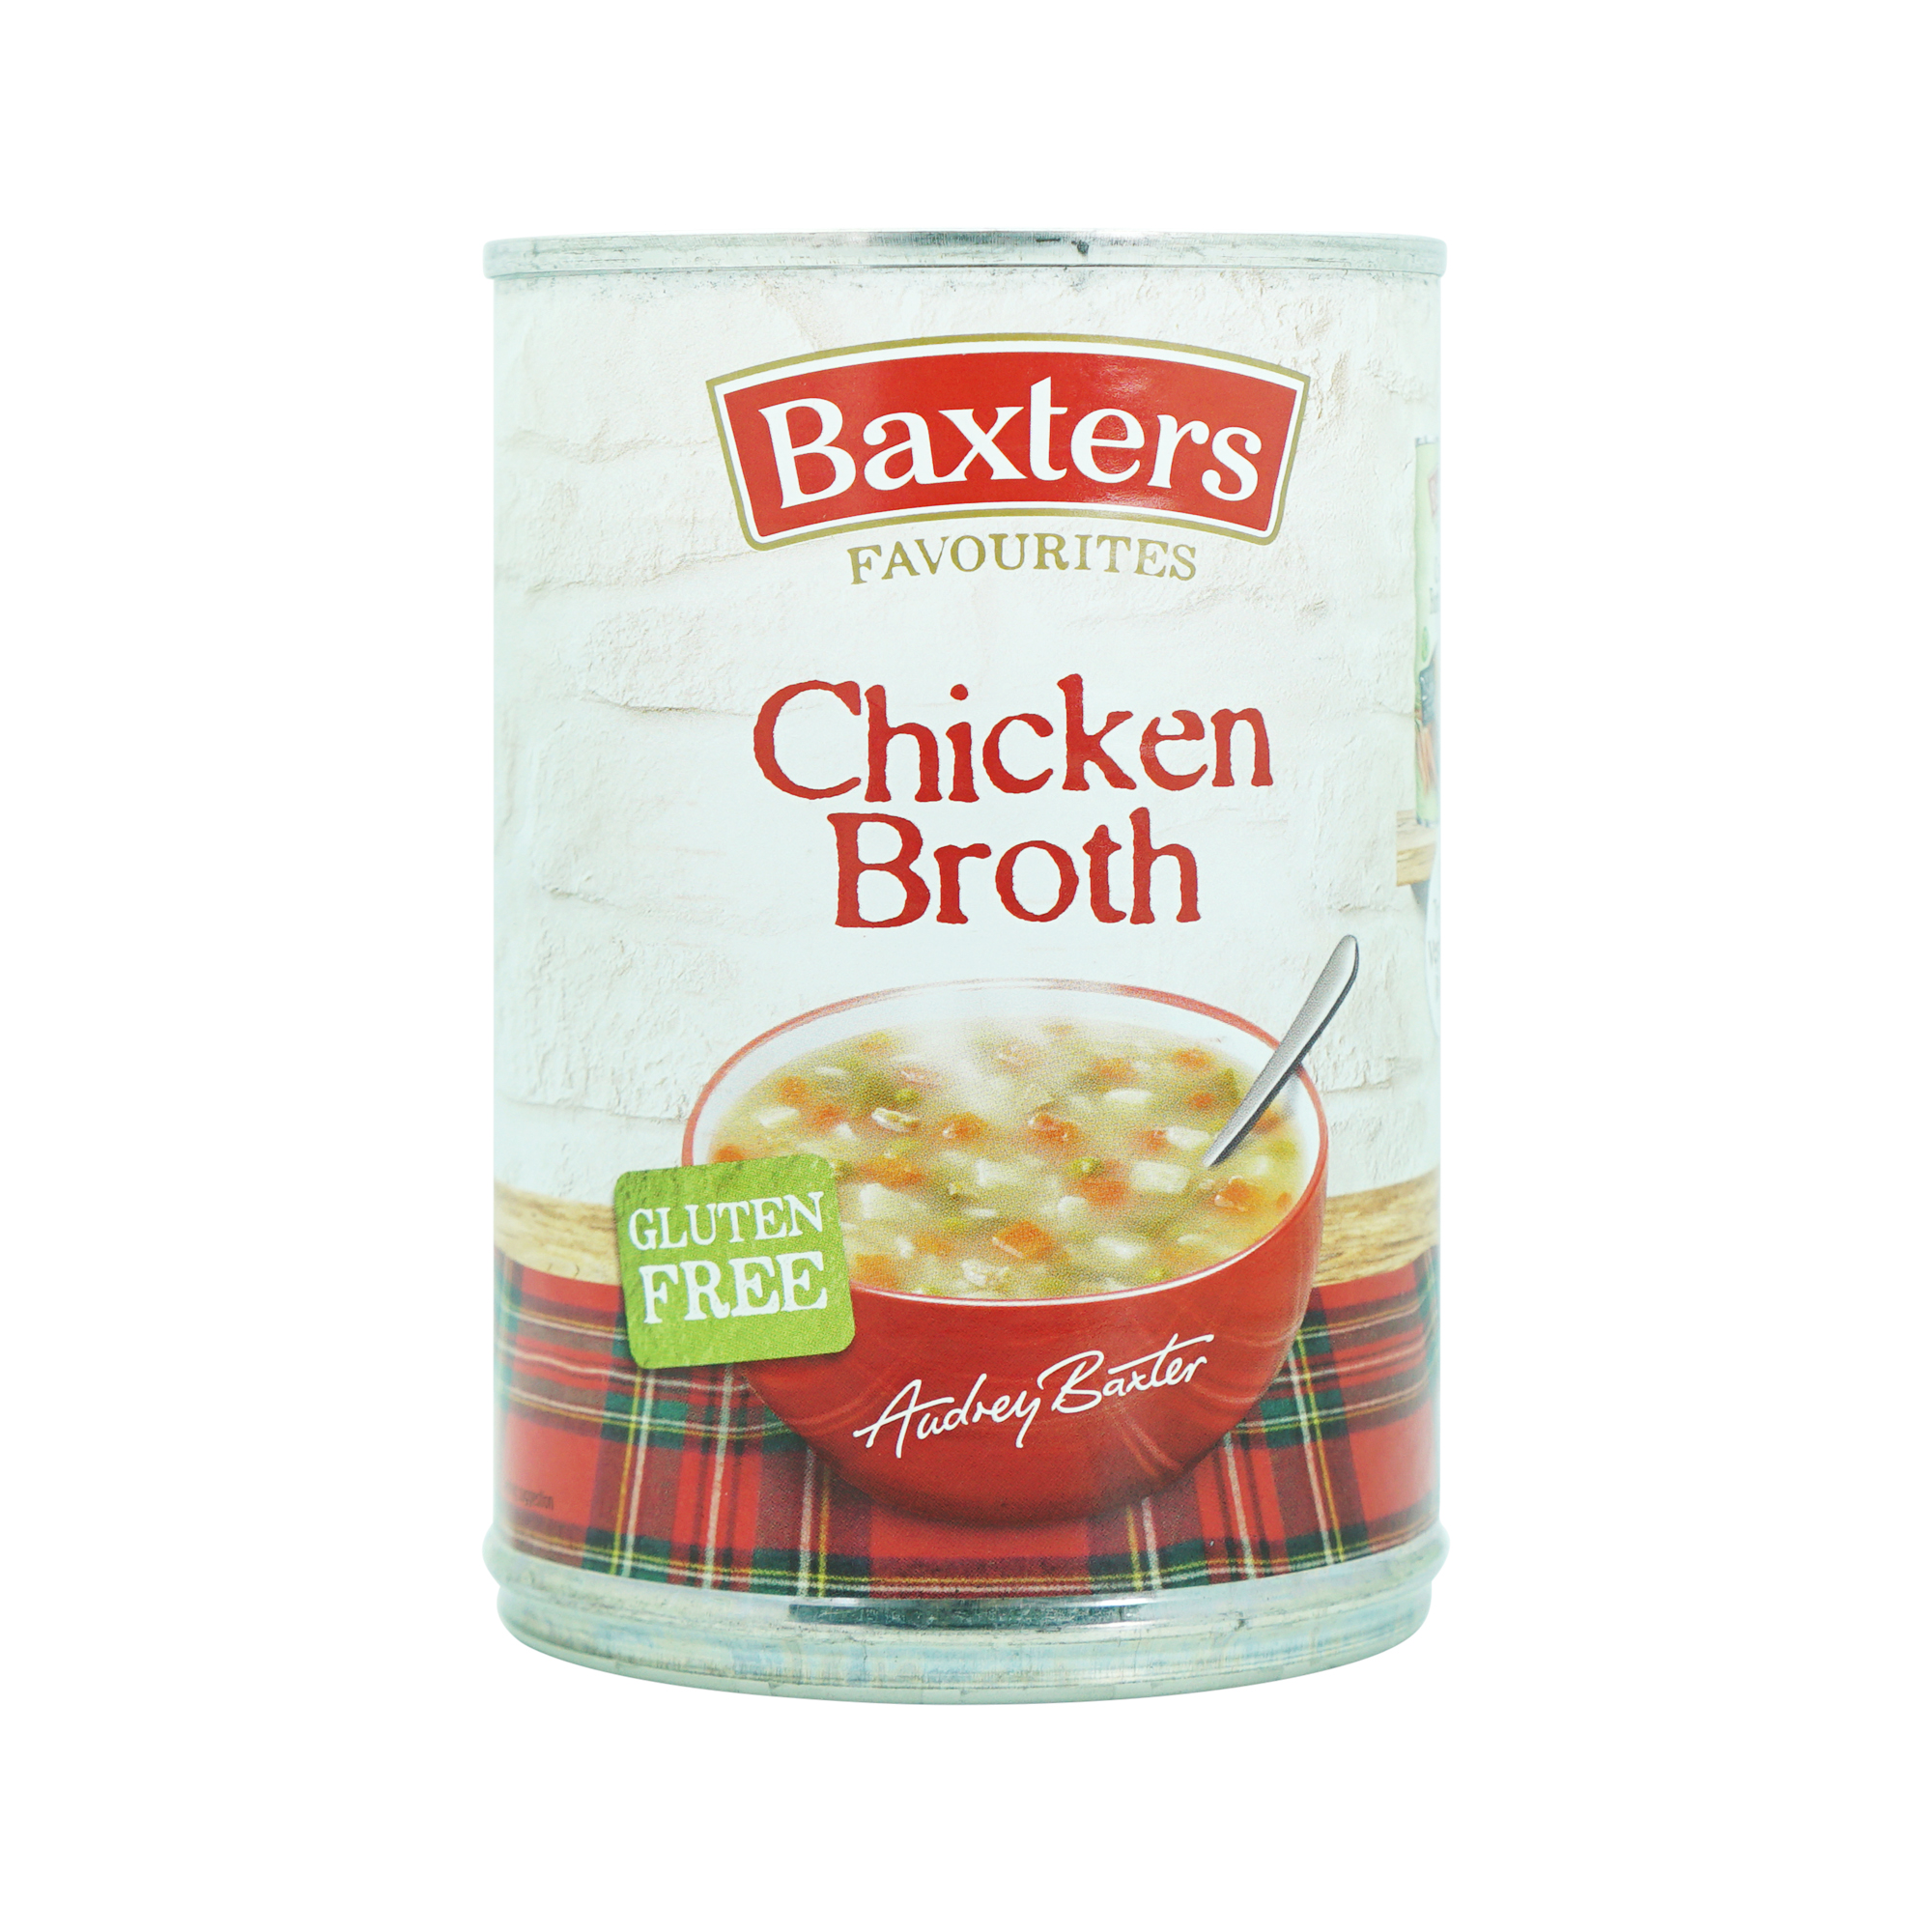 Baxters Favourites Chicken Broth (400g)